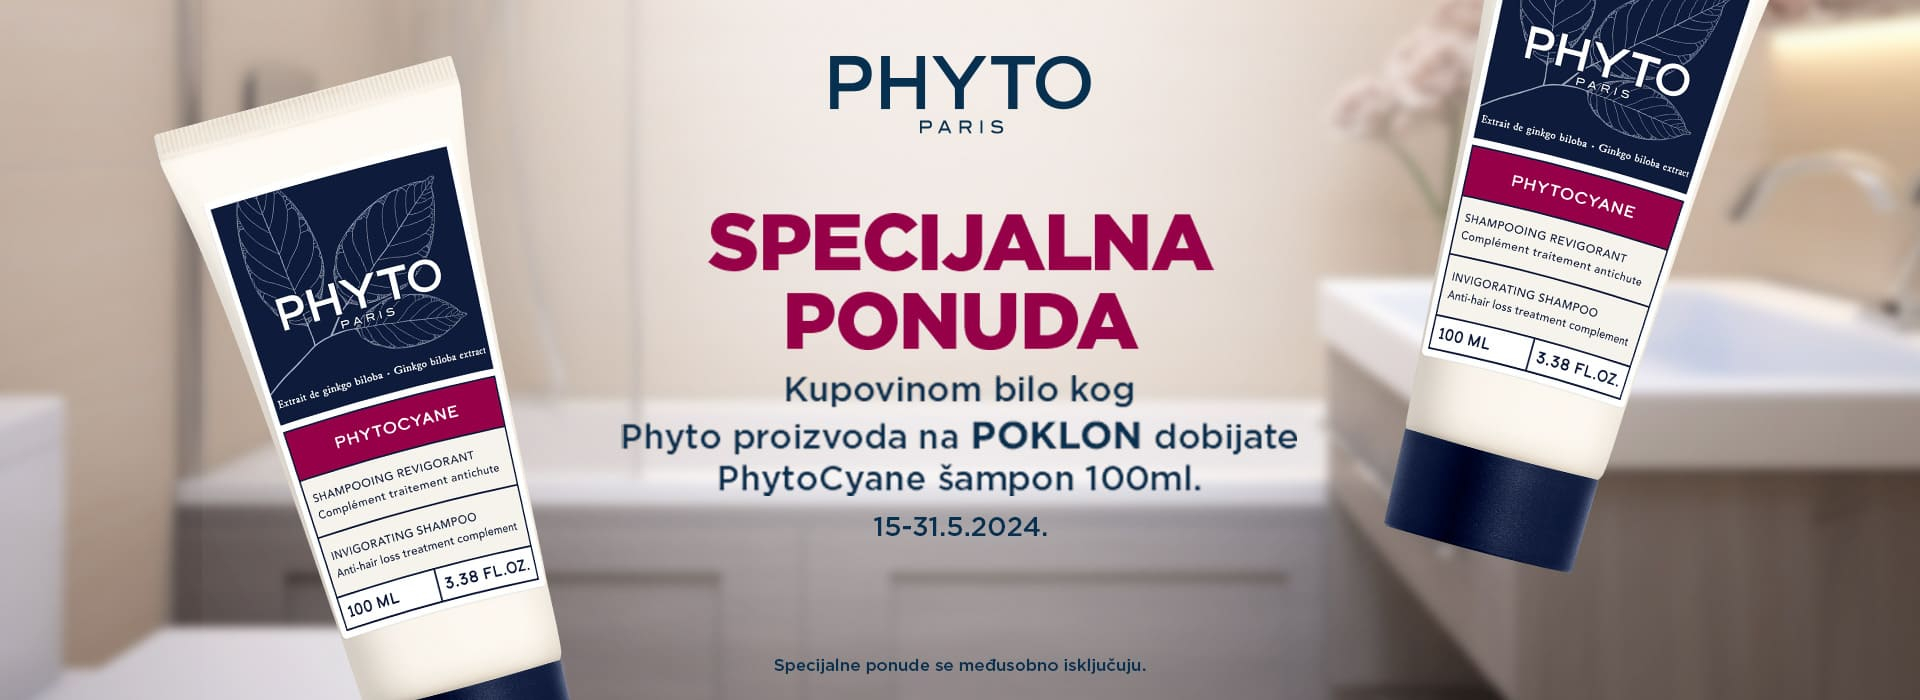 Phyto poklon 05/24 brend - Srbotrade